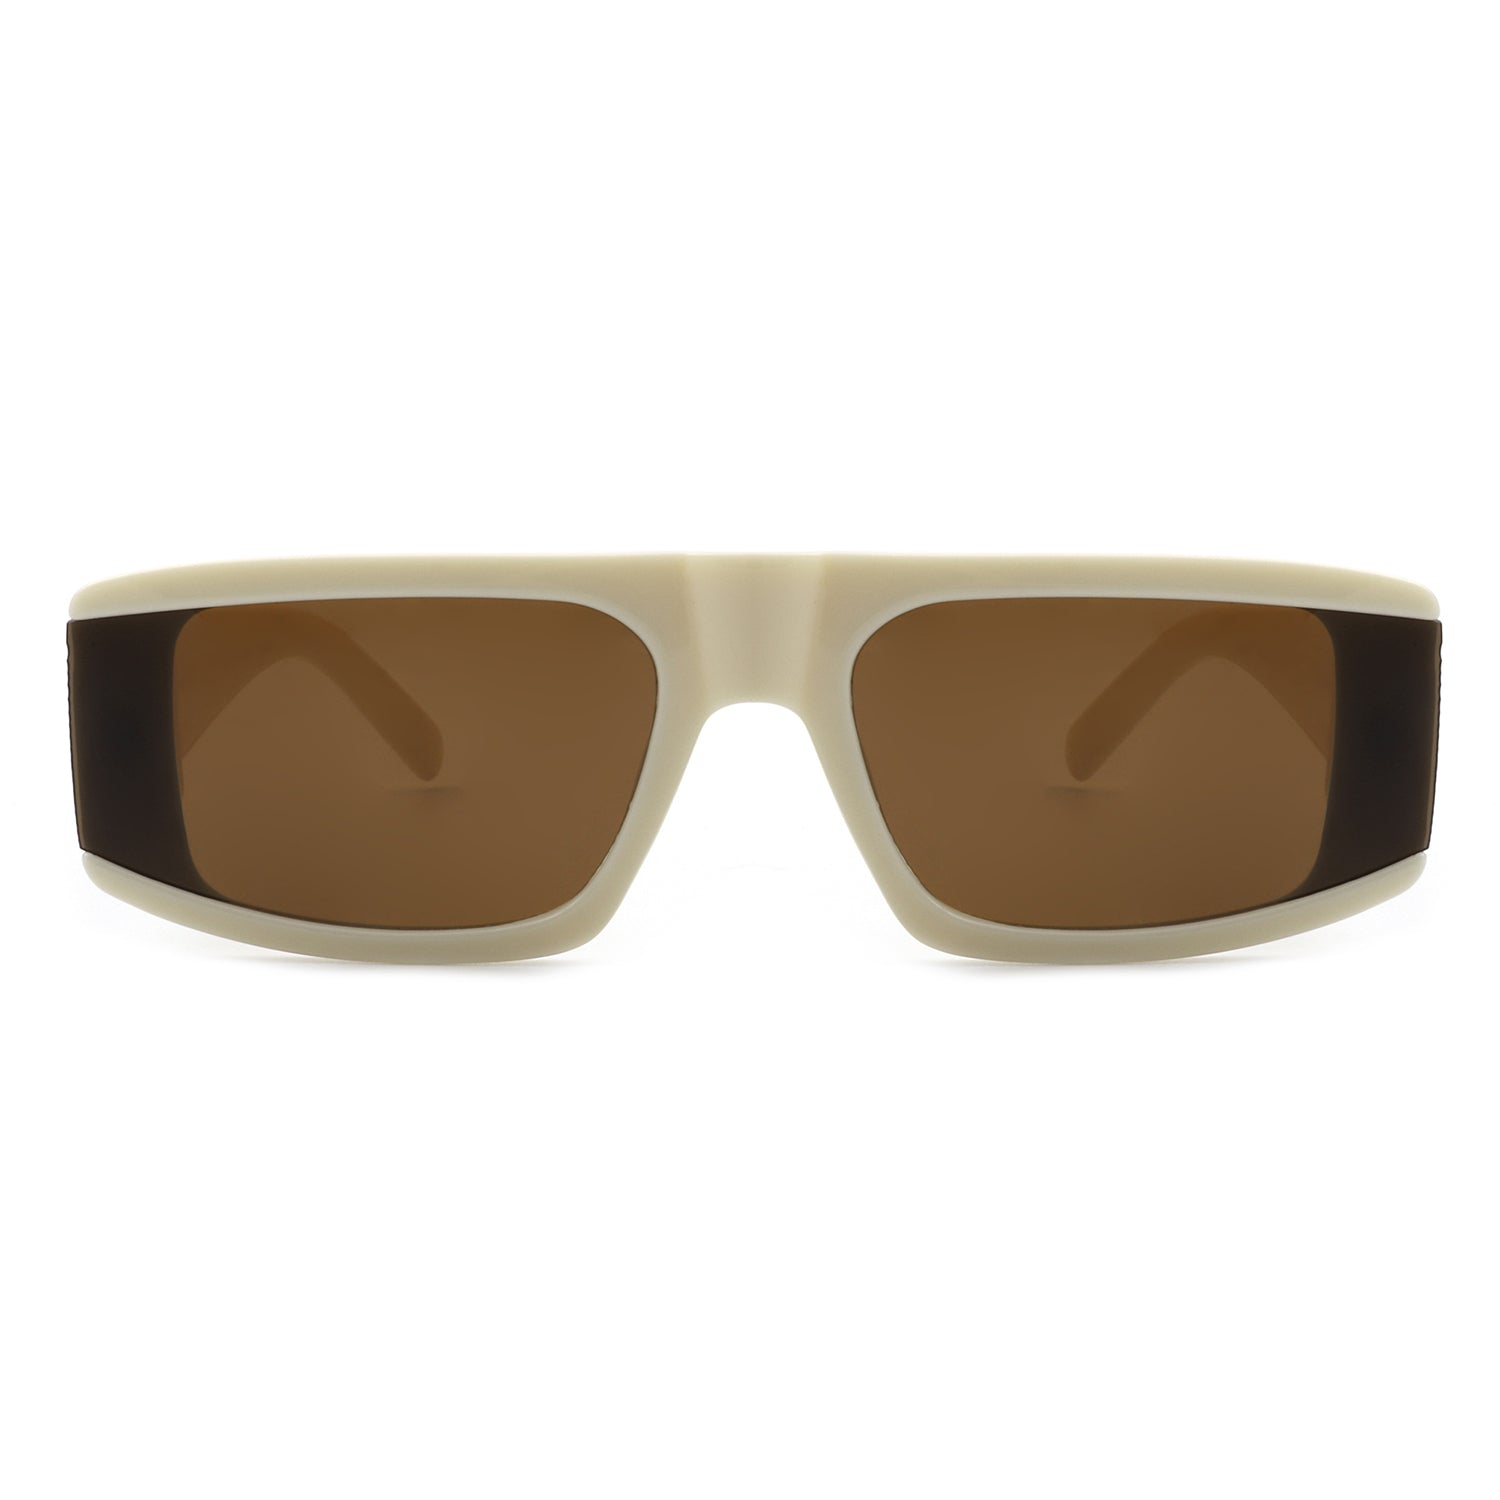 HS1040-1 - Rectangle Vintage Flat Top Retro Fashion Sunglasses